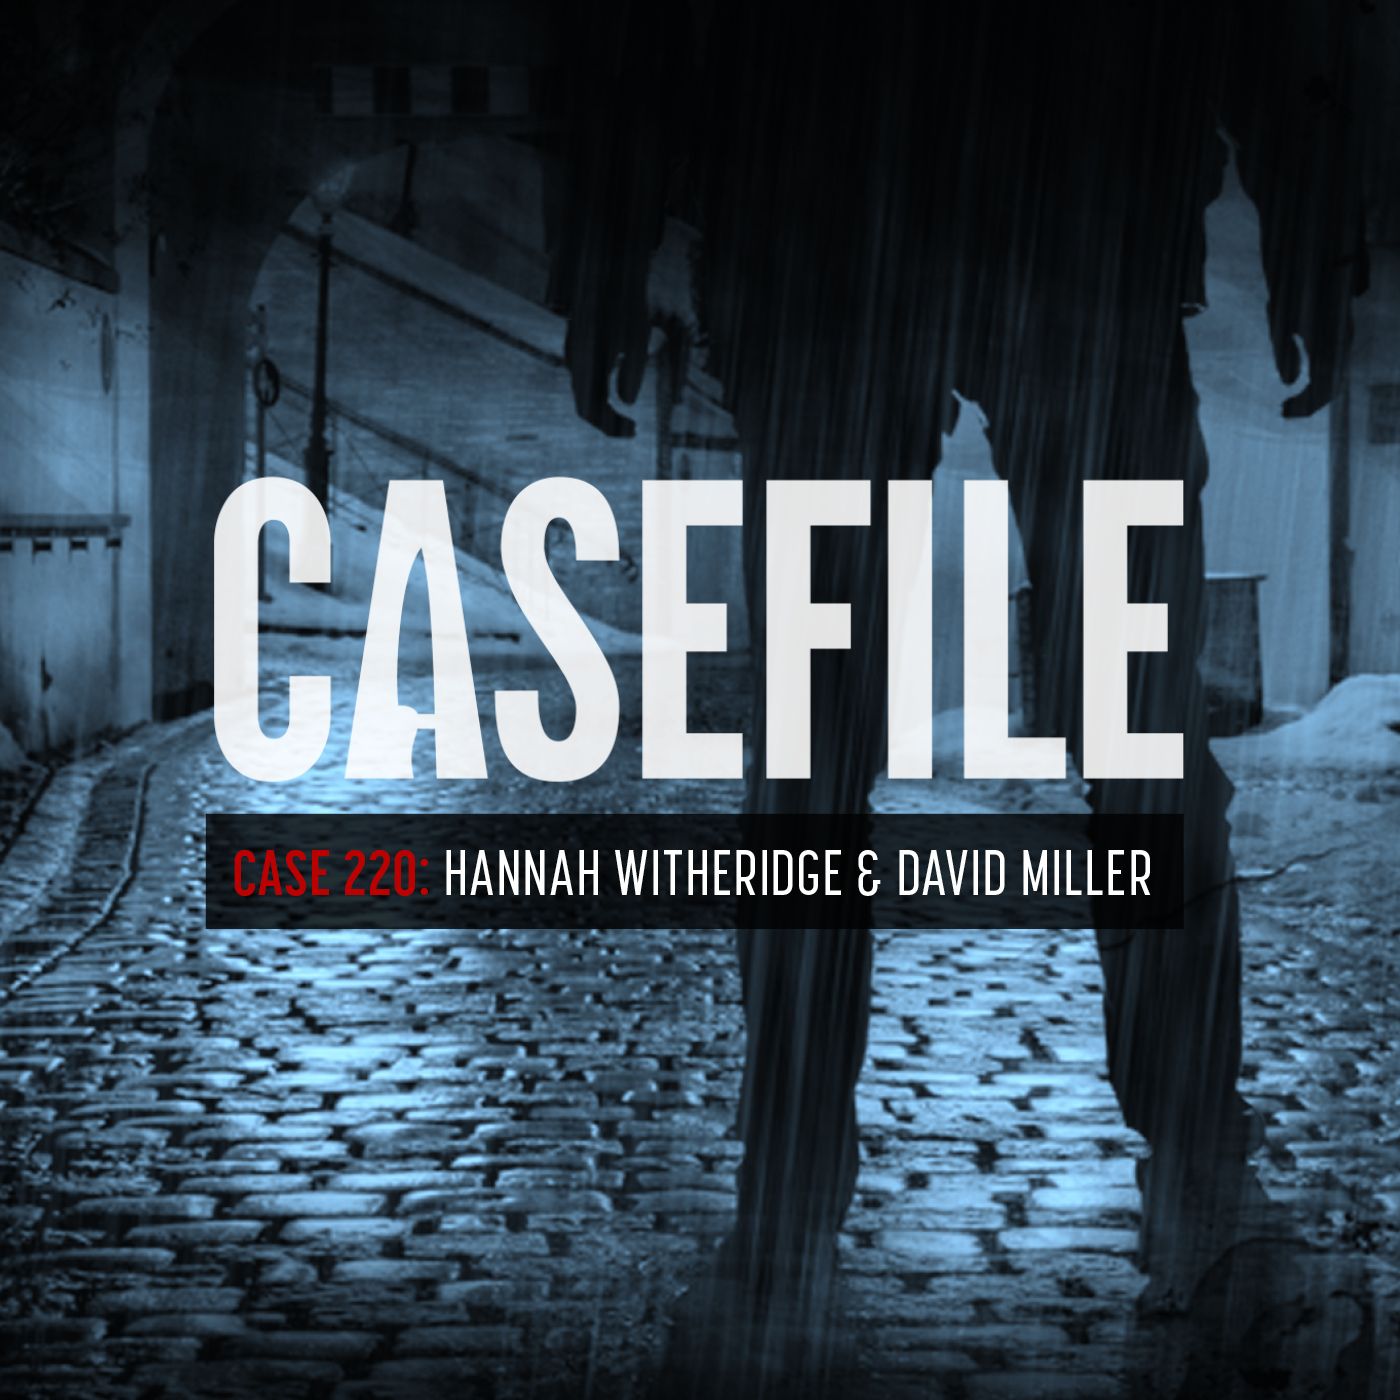 Case 220: Hannah Witheridge & David Miller